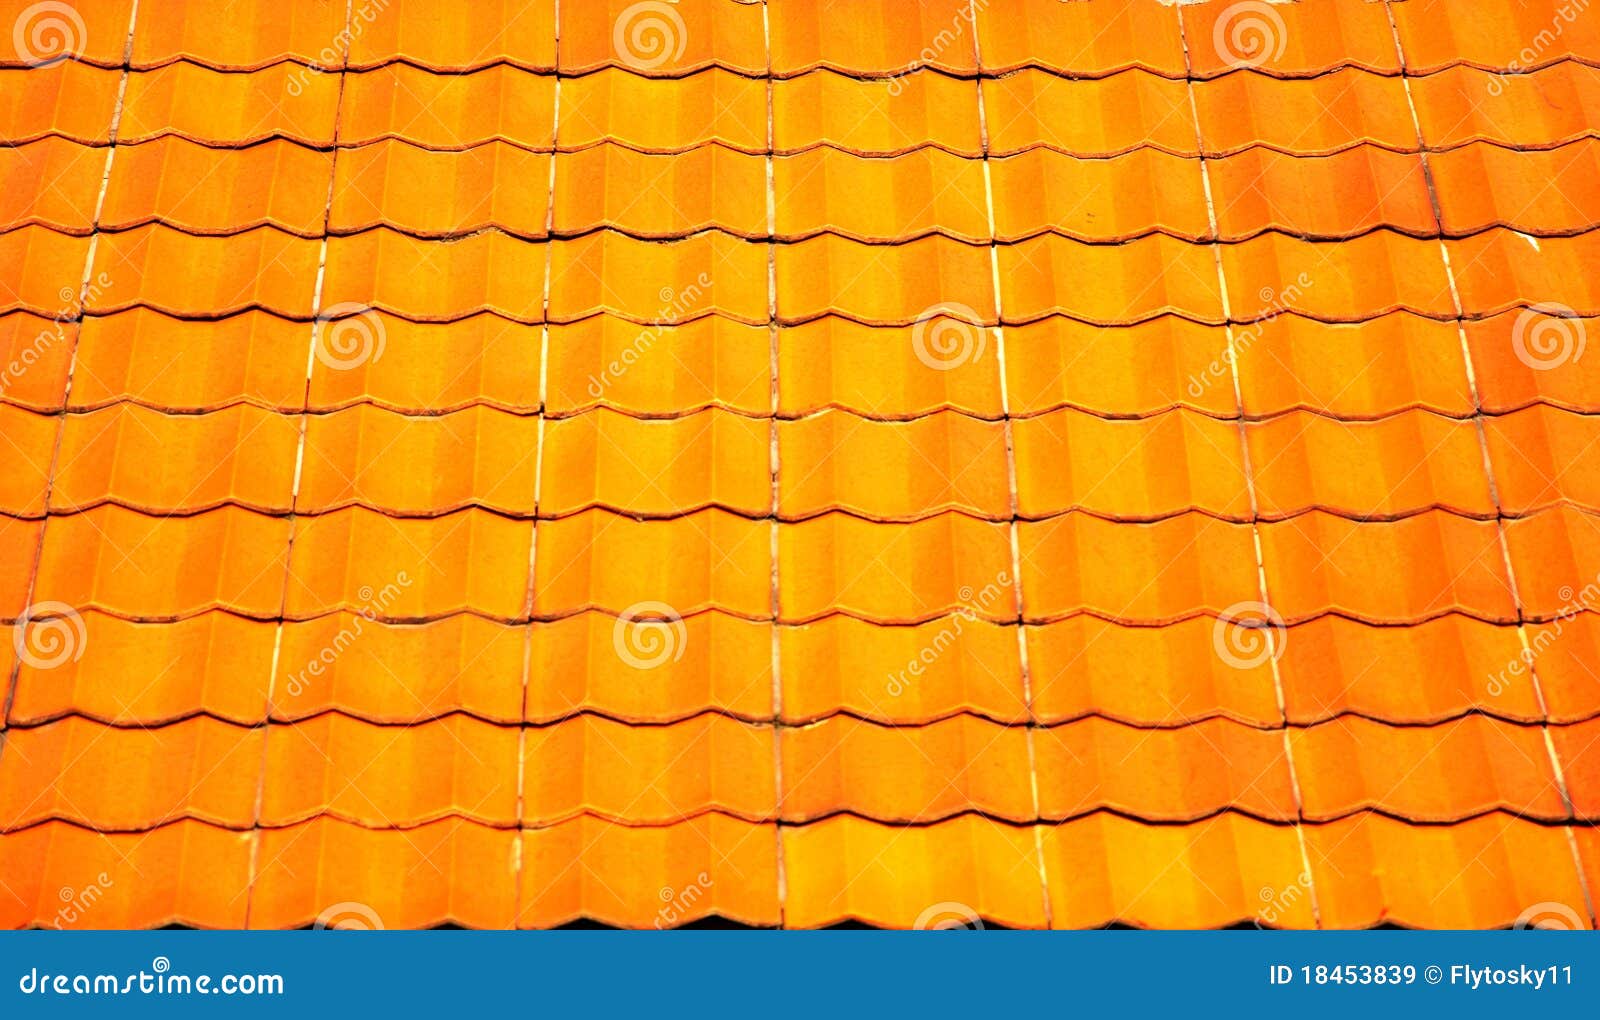 Orange Tile Roof Royalty Free Stock Images - Image: 18453839